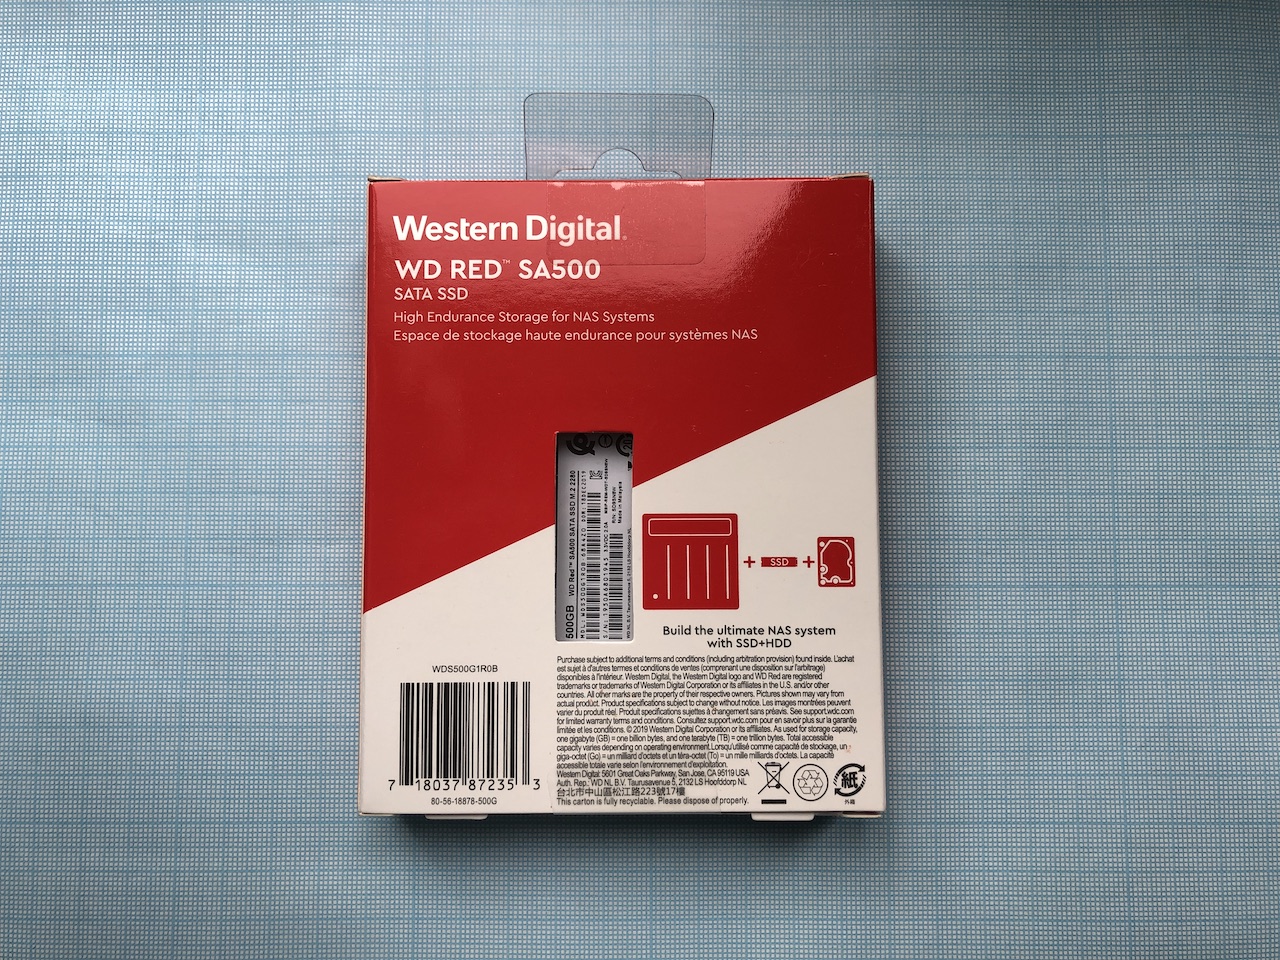 Обзор и тестирование WD Red SA500 500GB (WDS500G1R0B)